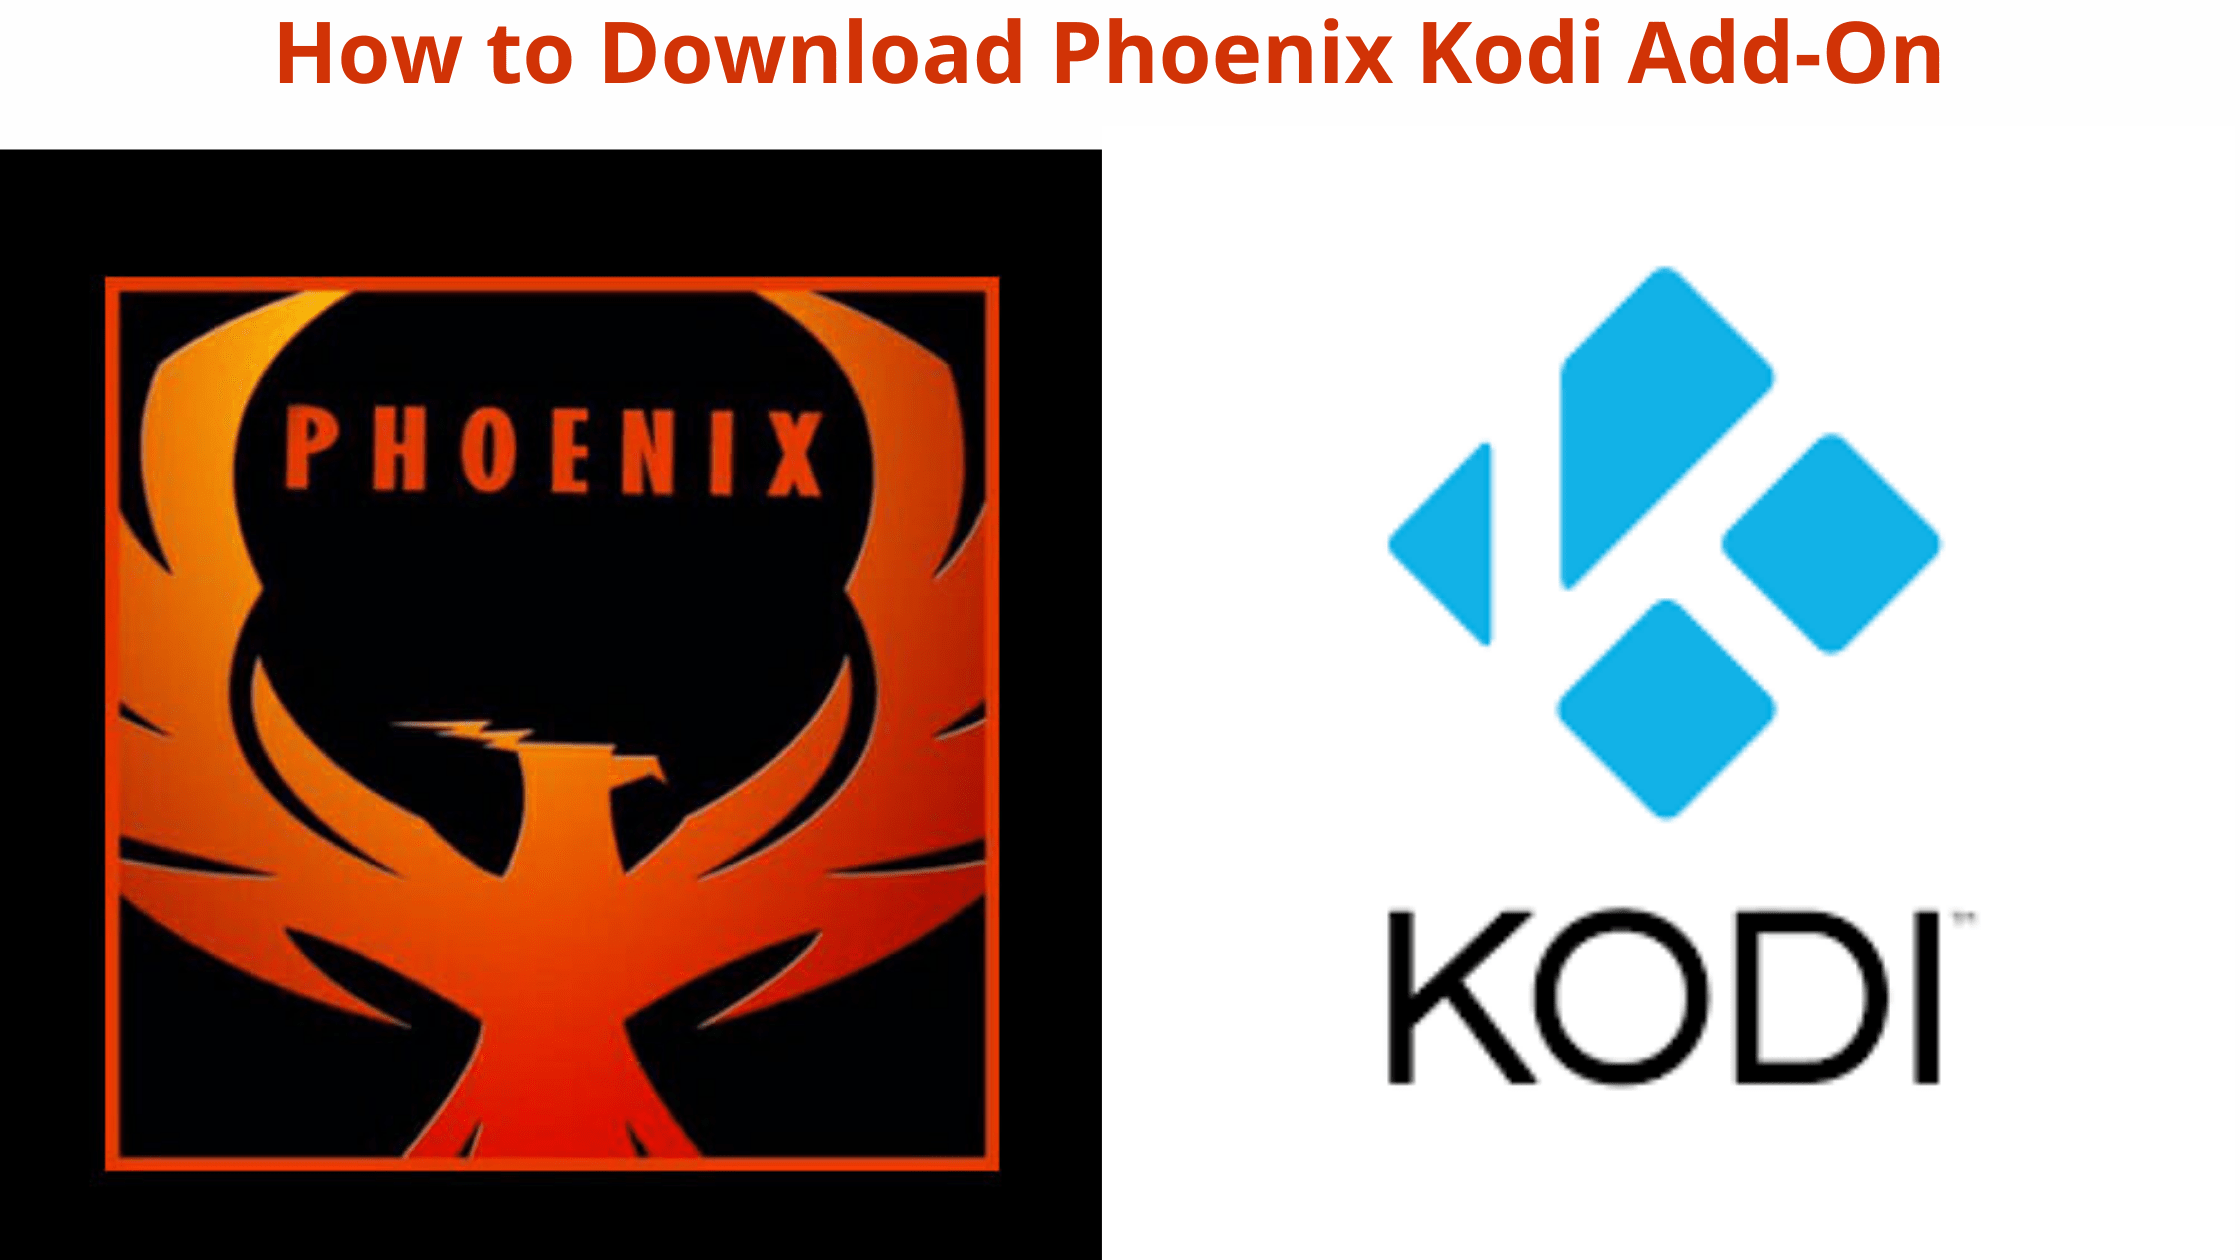 Phoenix Kodi Add-On